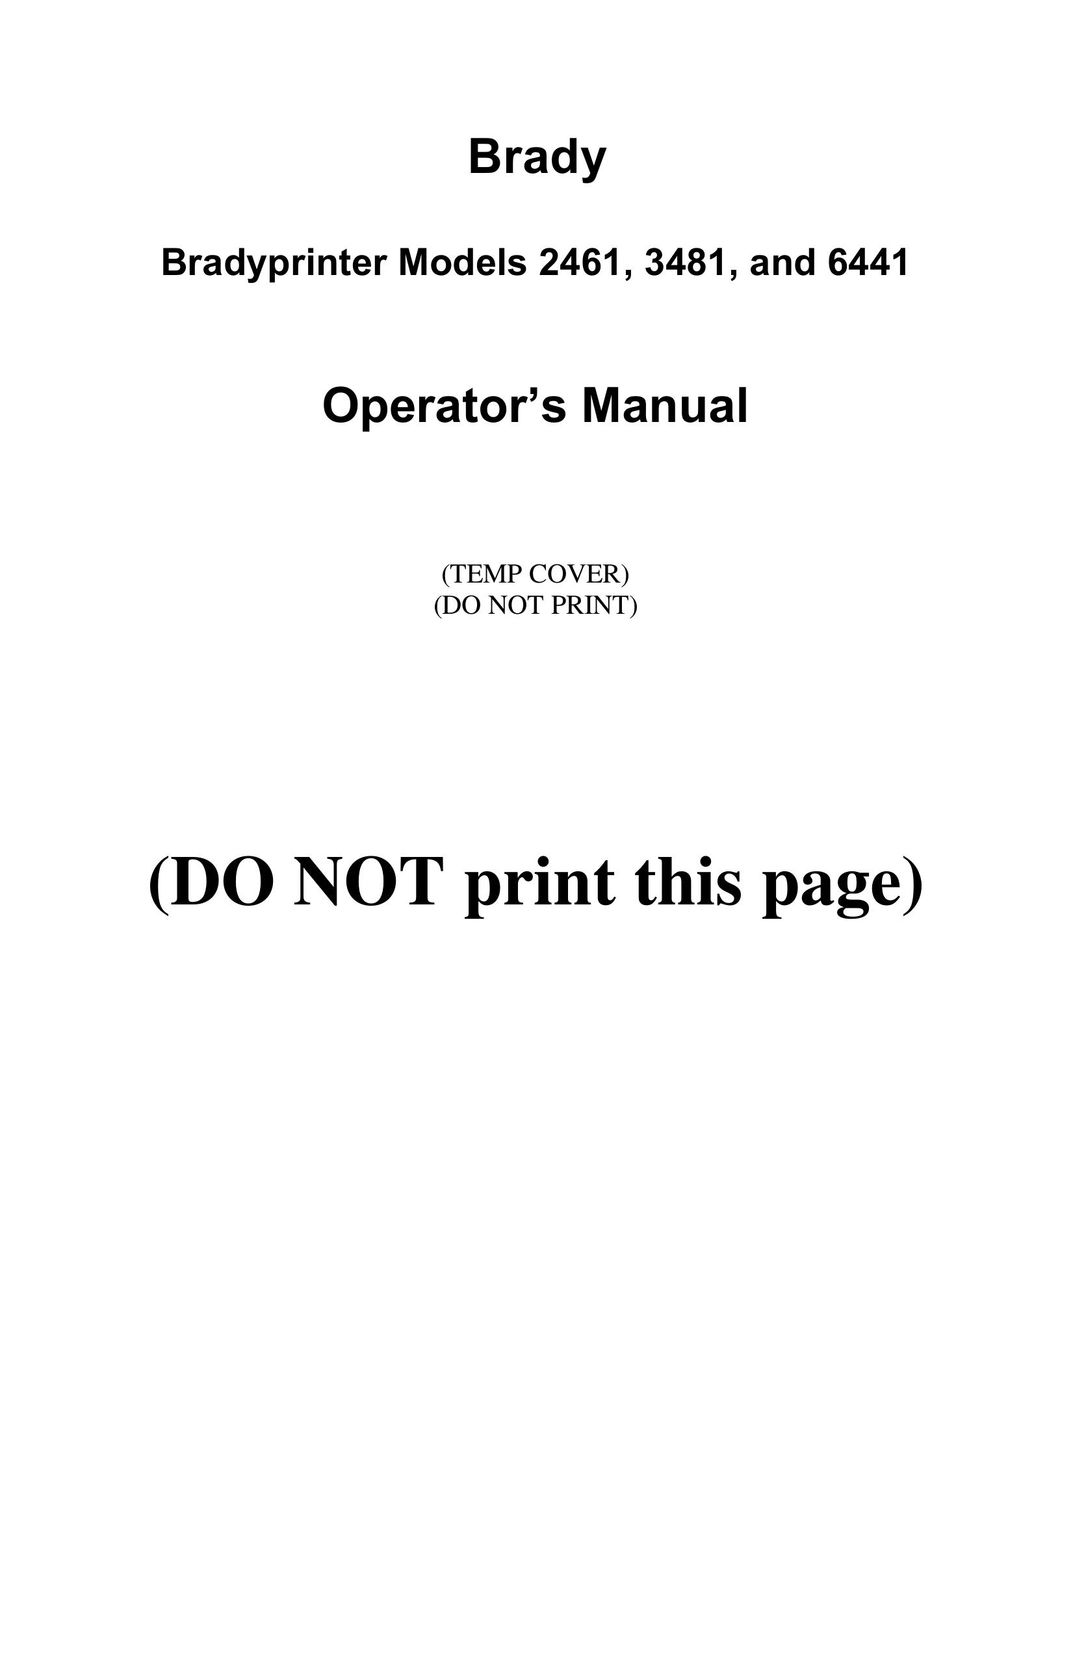 Brady 6441 Printer User Manual